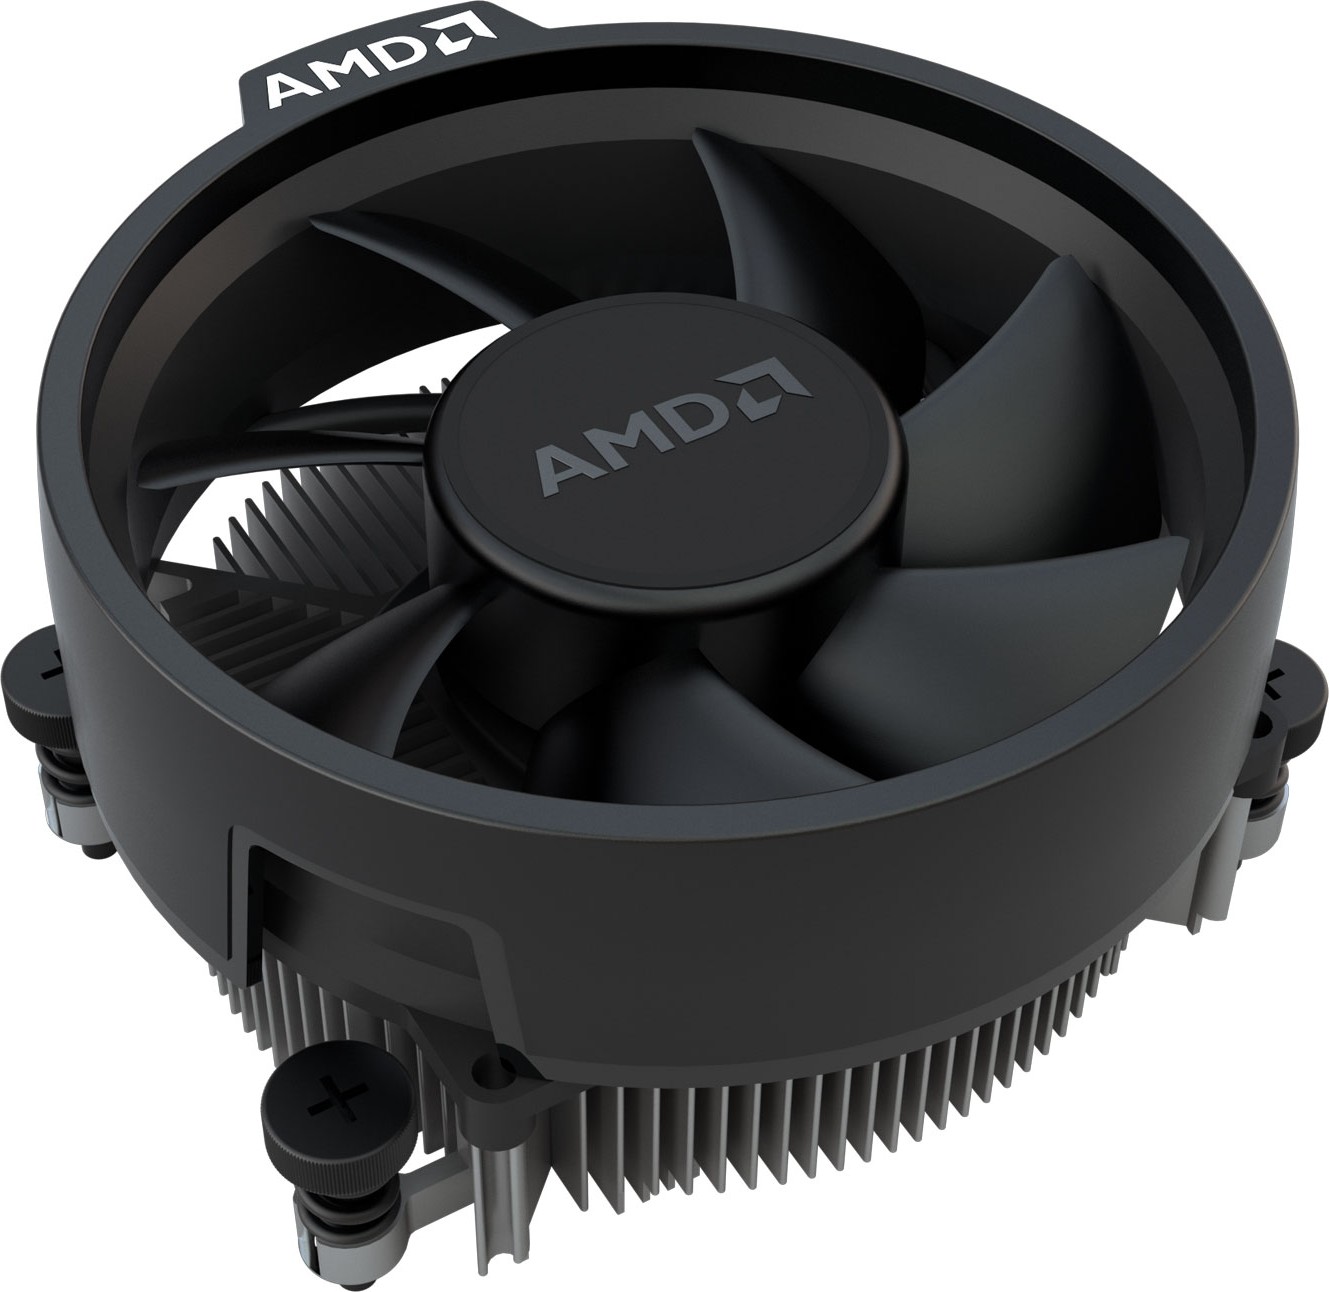 Stock AMD cooler